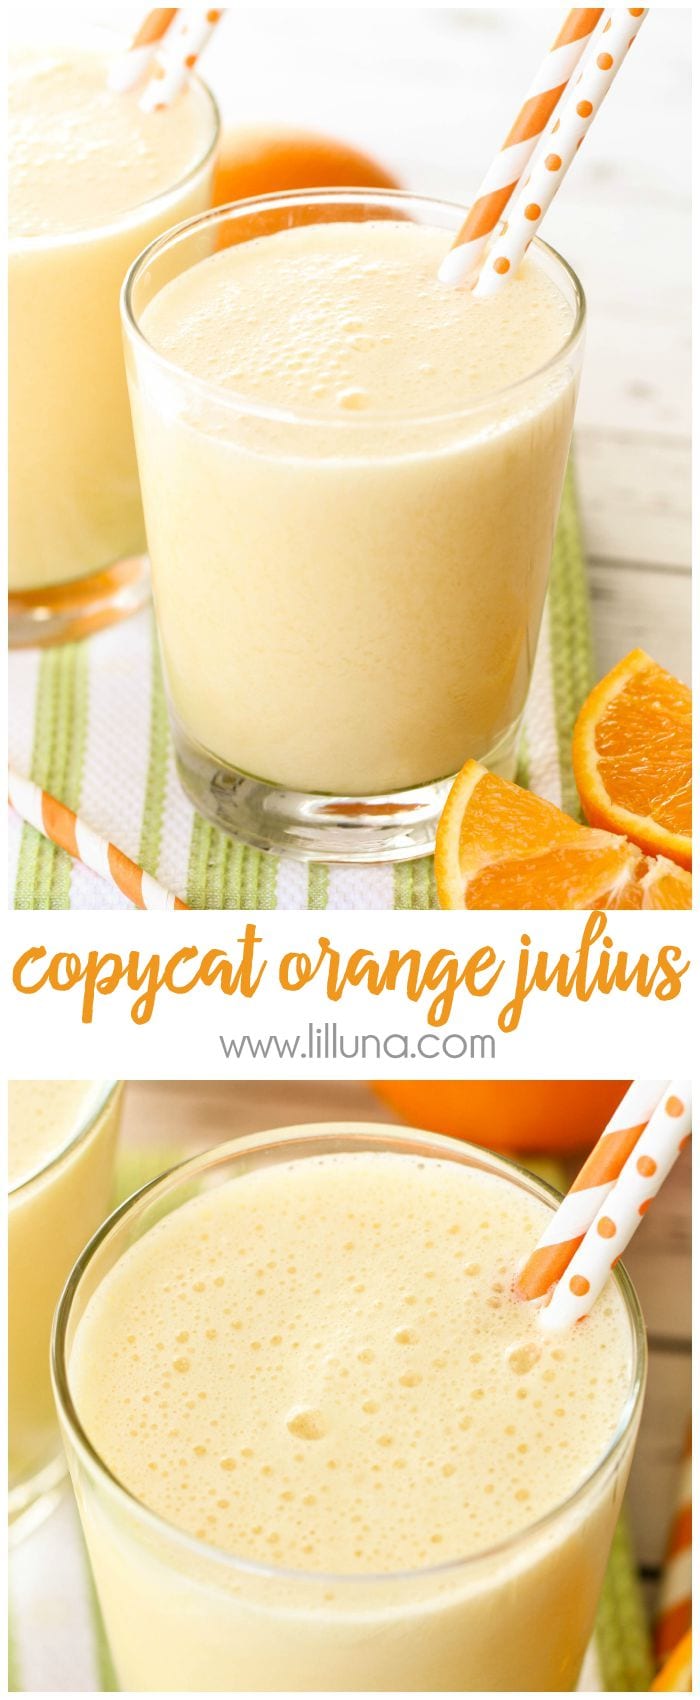 make orange julius